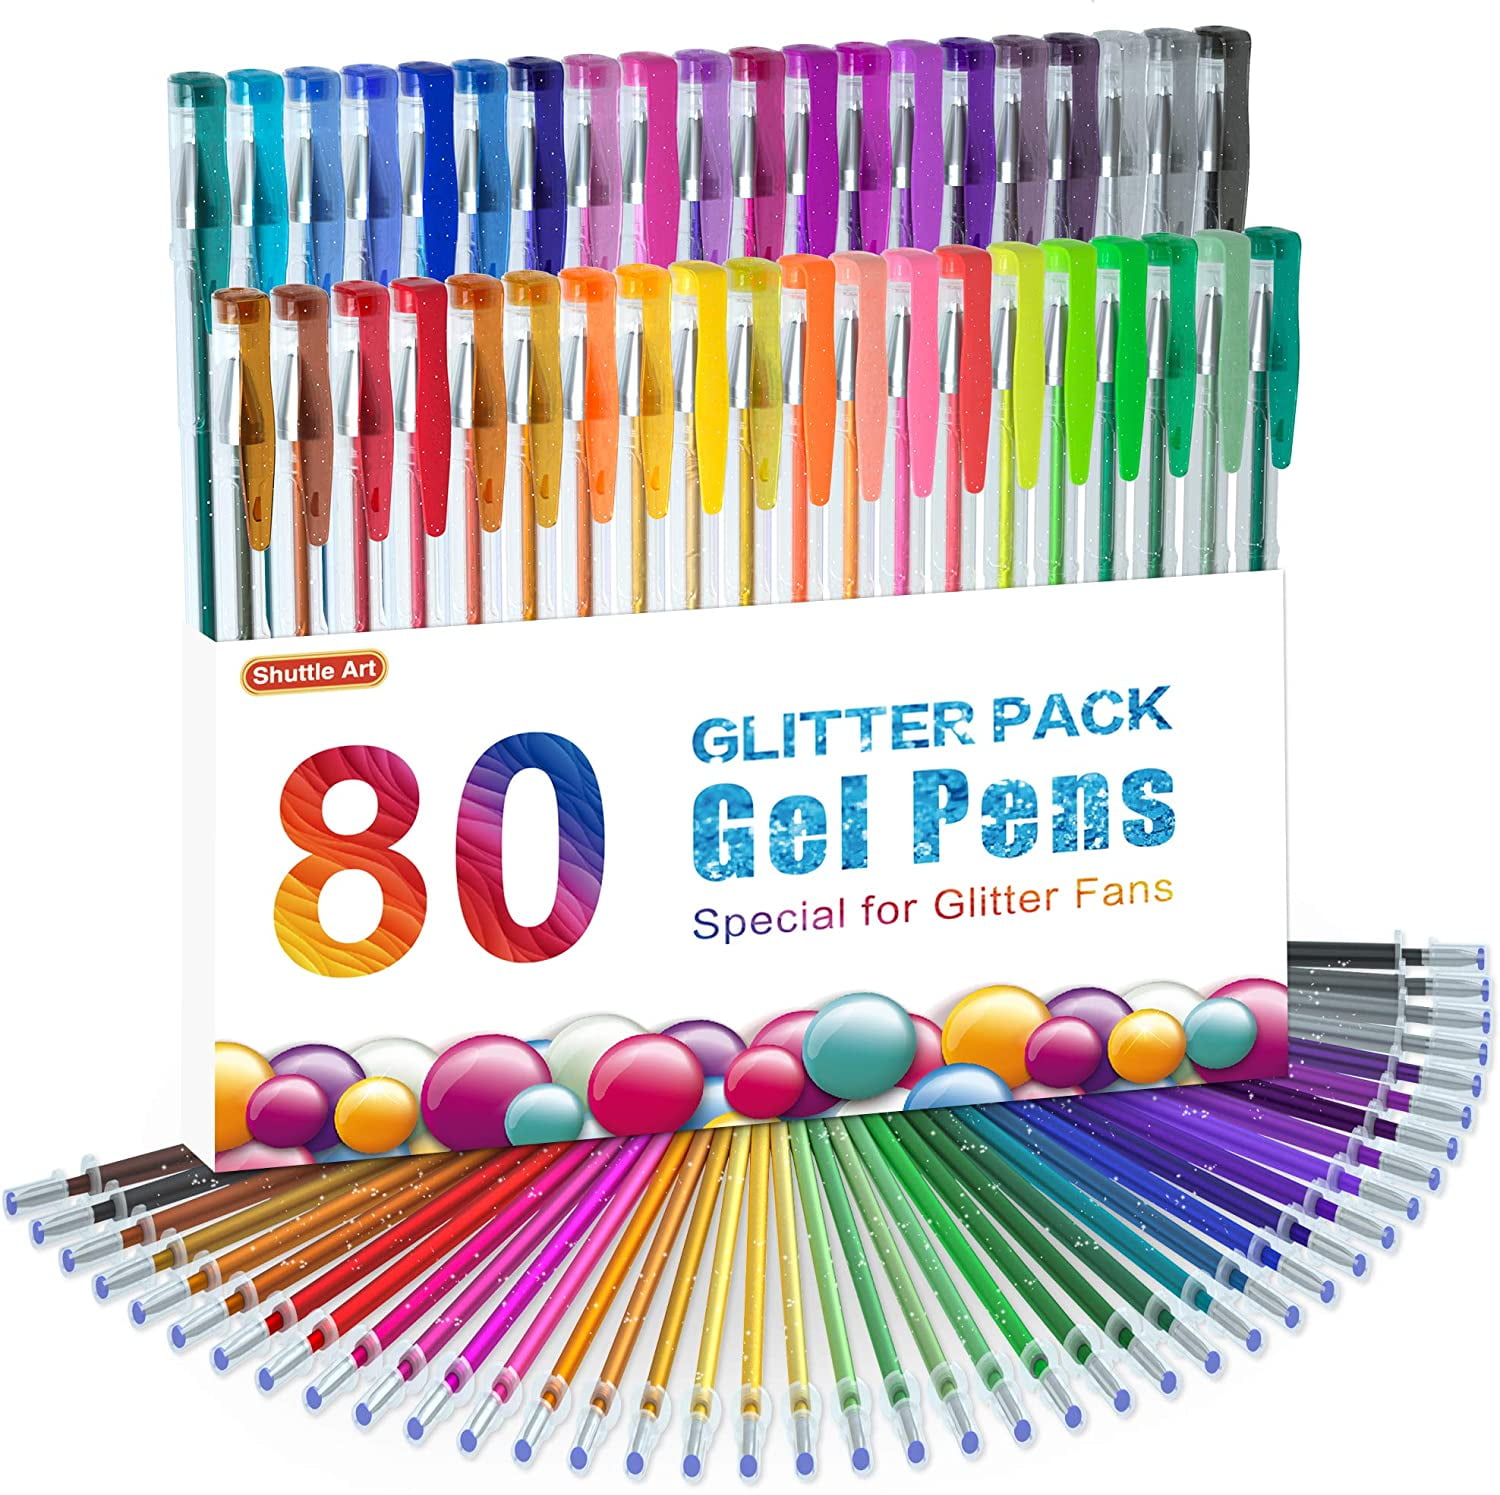 70 Coloring Gel Pens Adult Coloring Books, Drawing, Bible